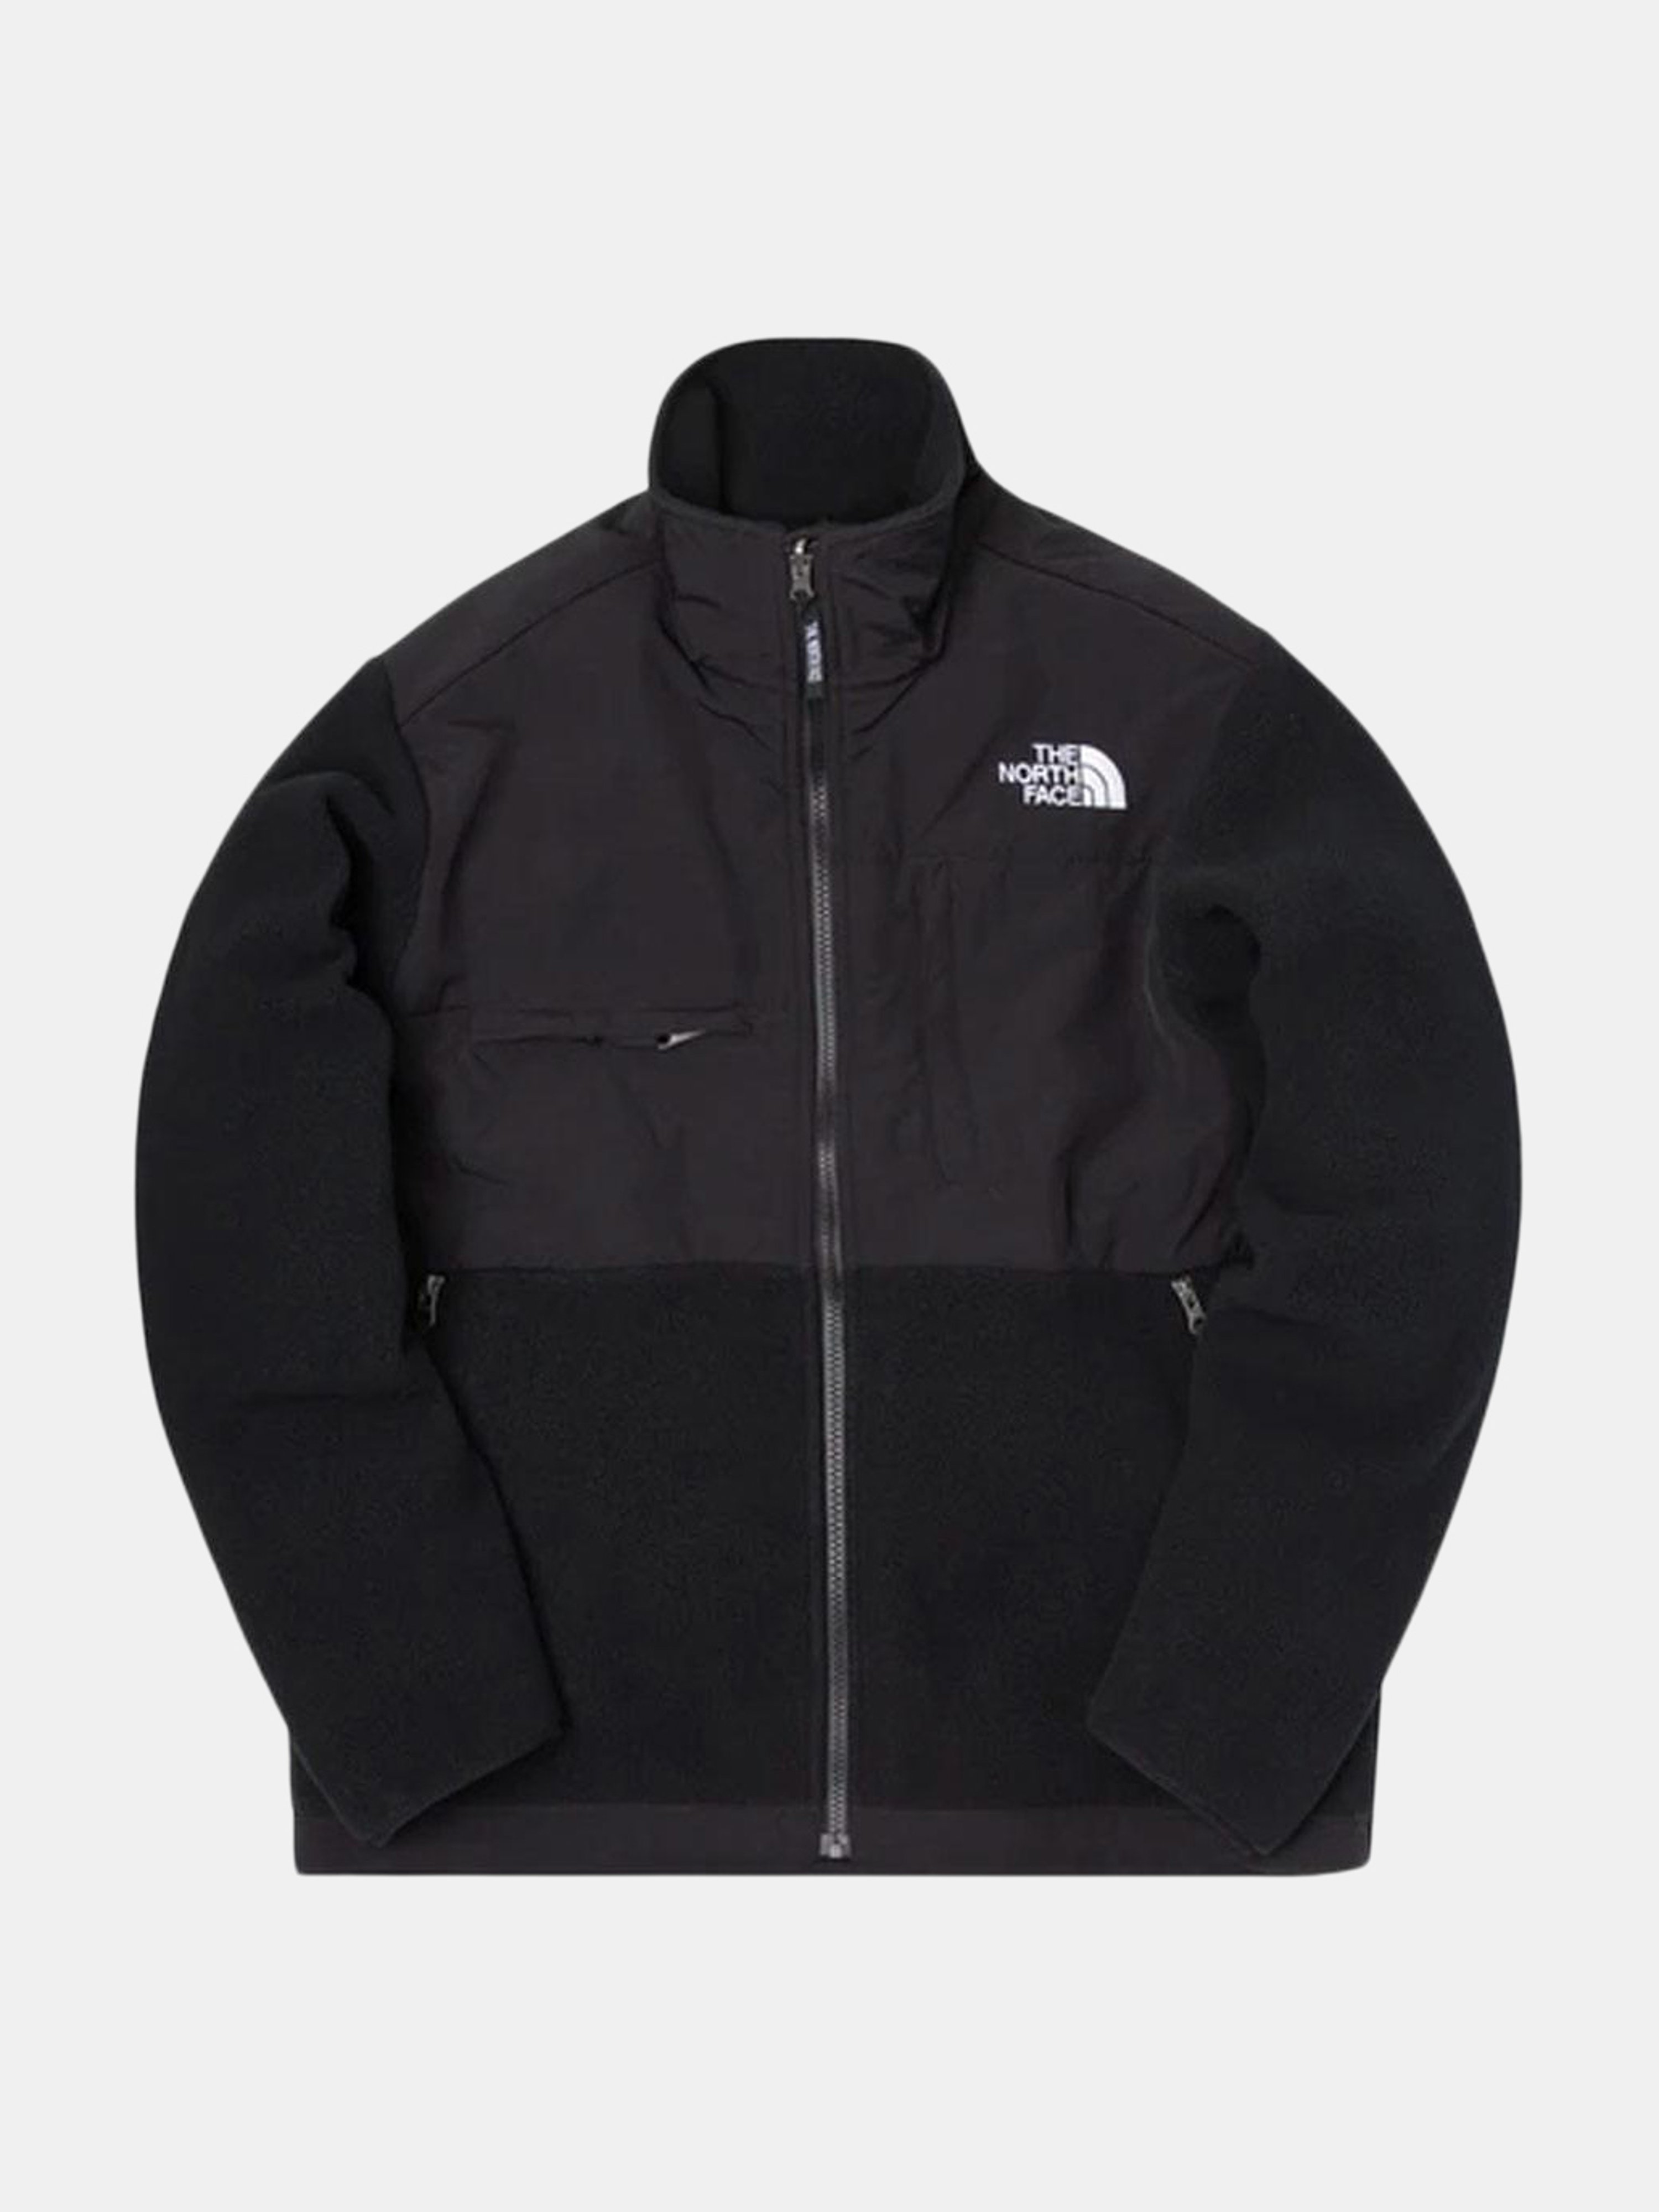 The North Face 1995 Retro Denali Jacket In Black